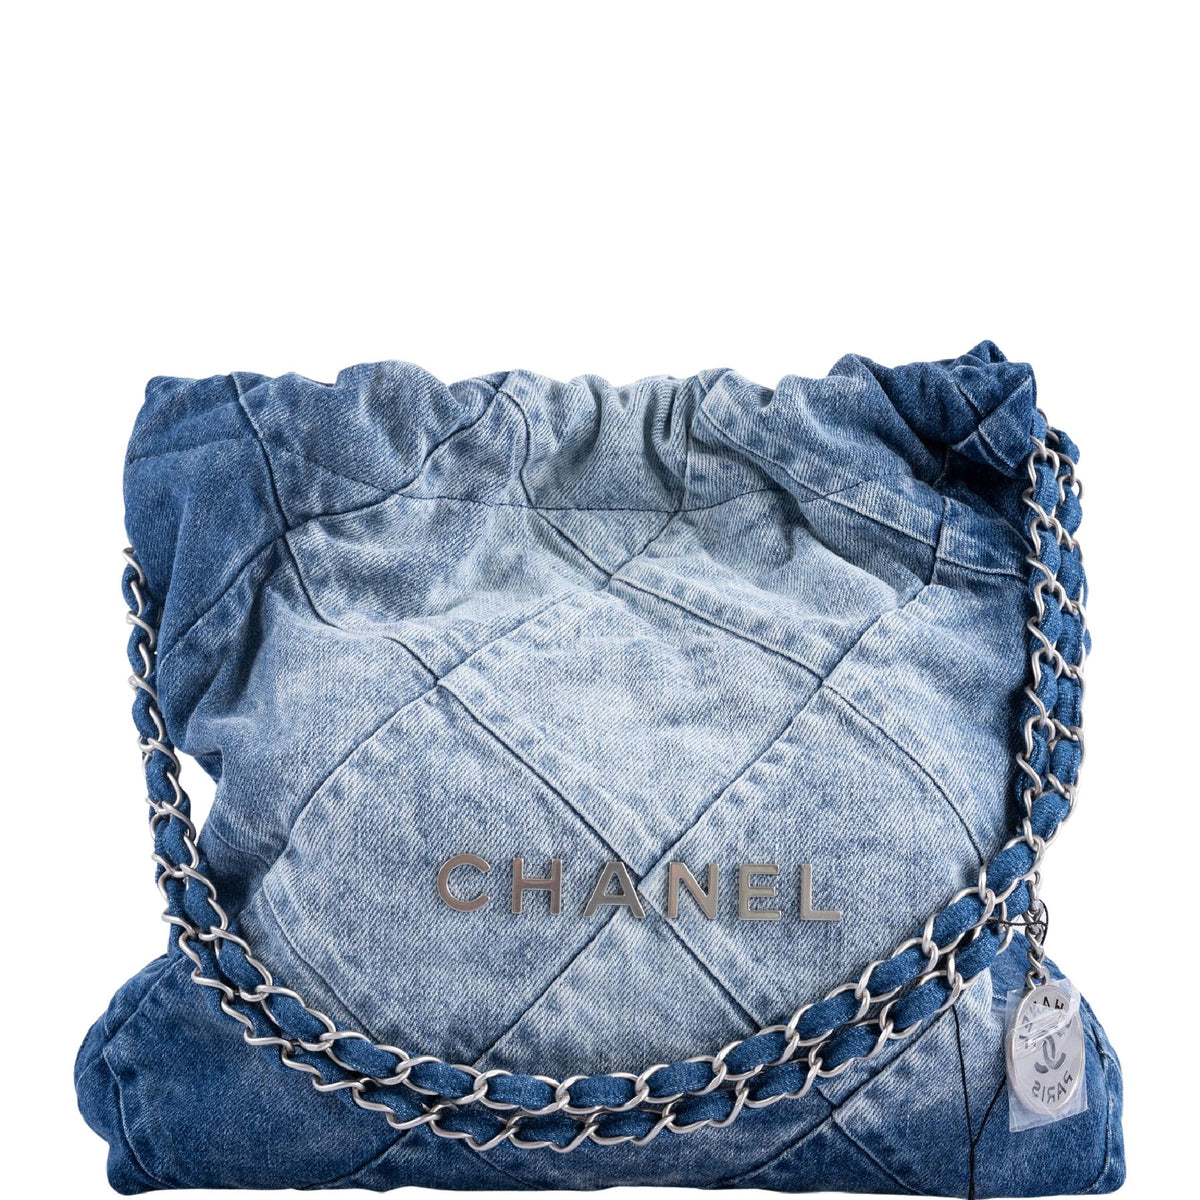 Chanel 22 handbag Chanel Blue in Denim - Jeans - 36195325